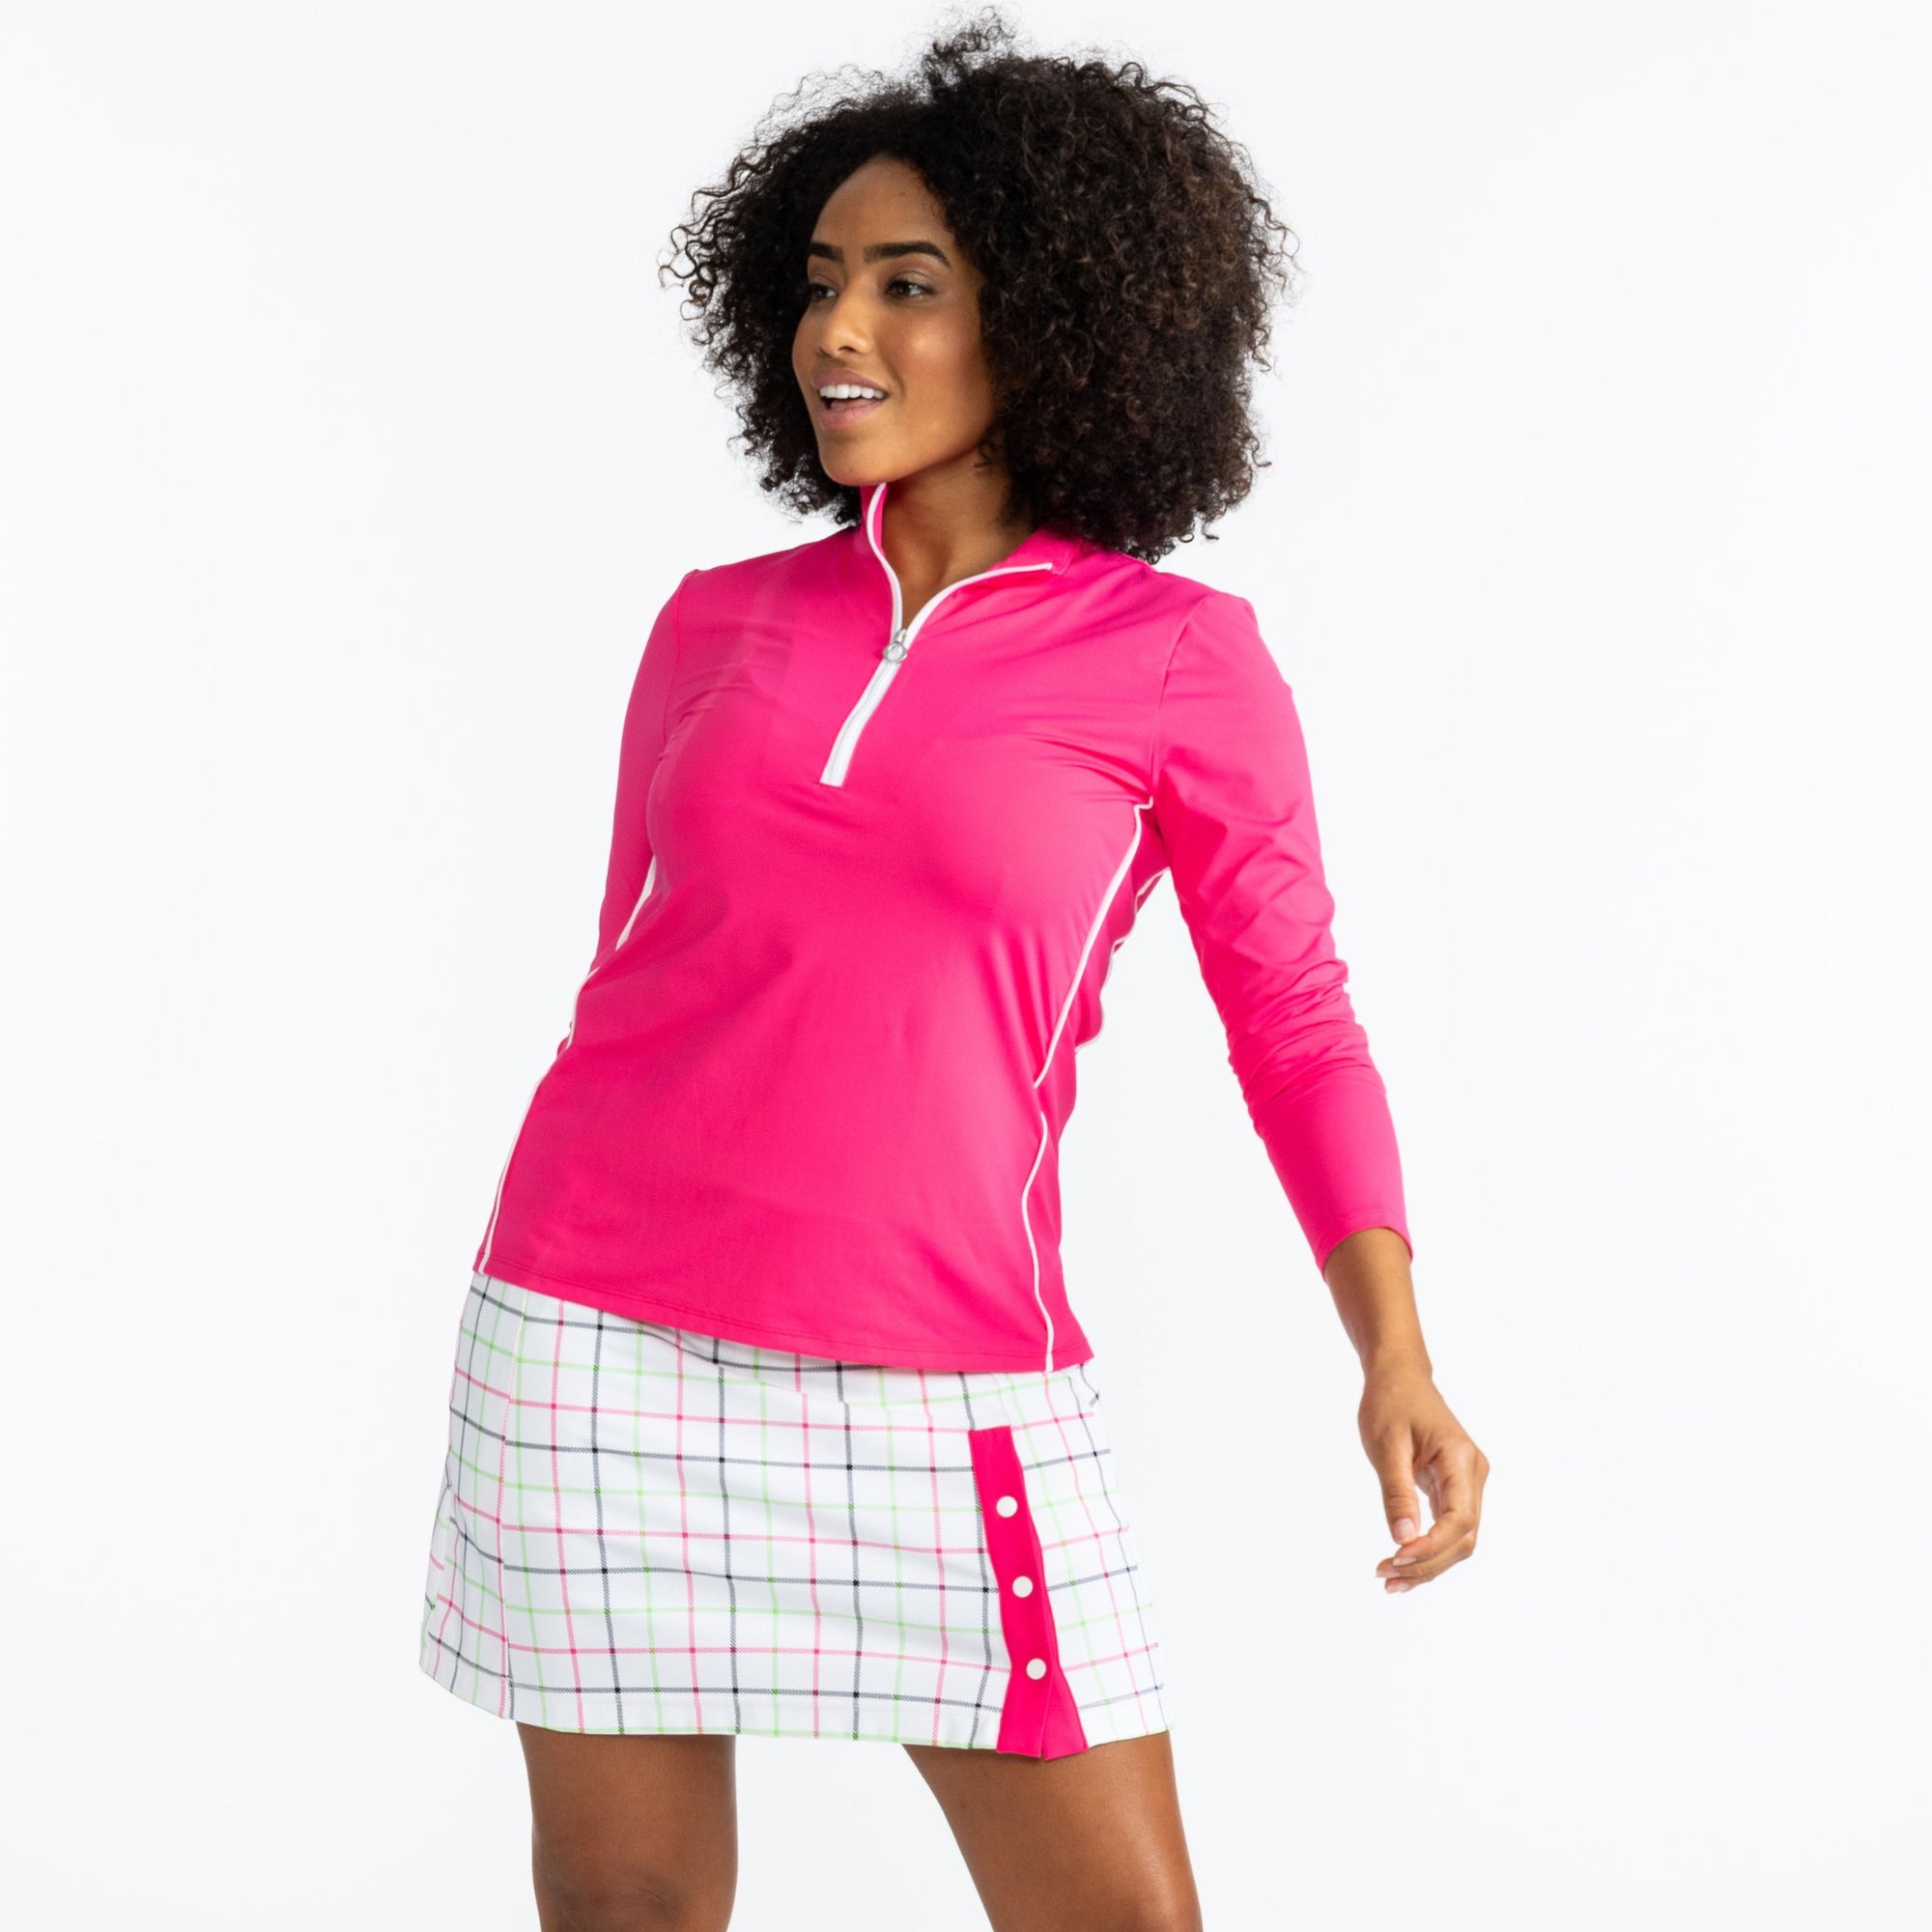 Kinona | Fairway Fittings - Women's Golf & Athleisure Wear Boutique.